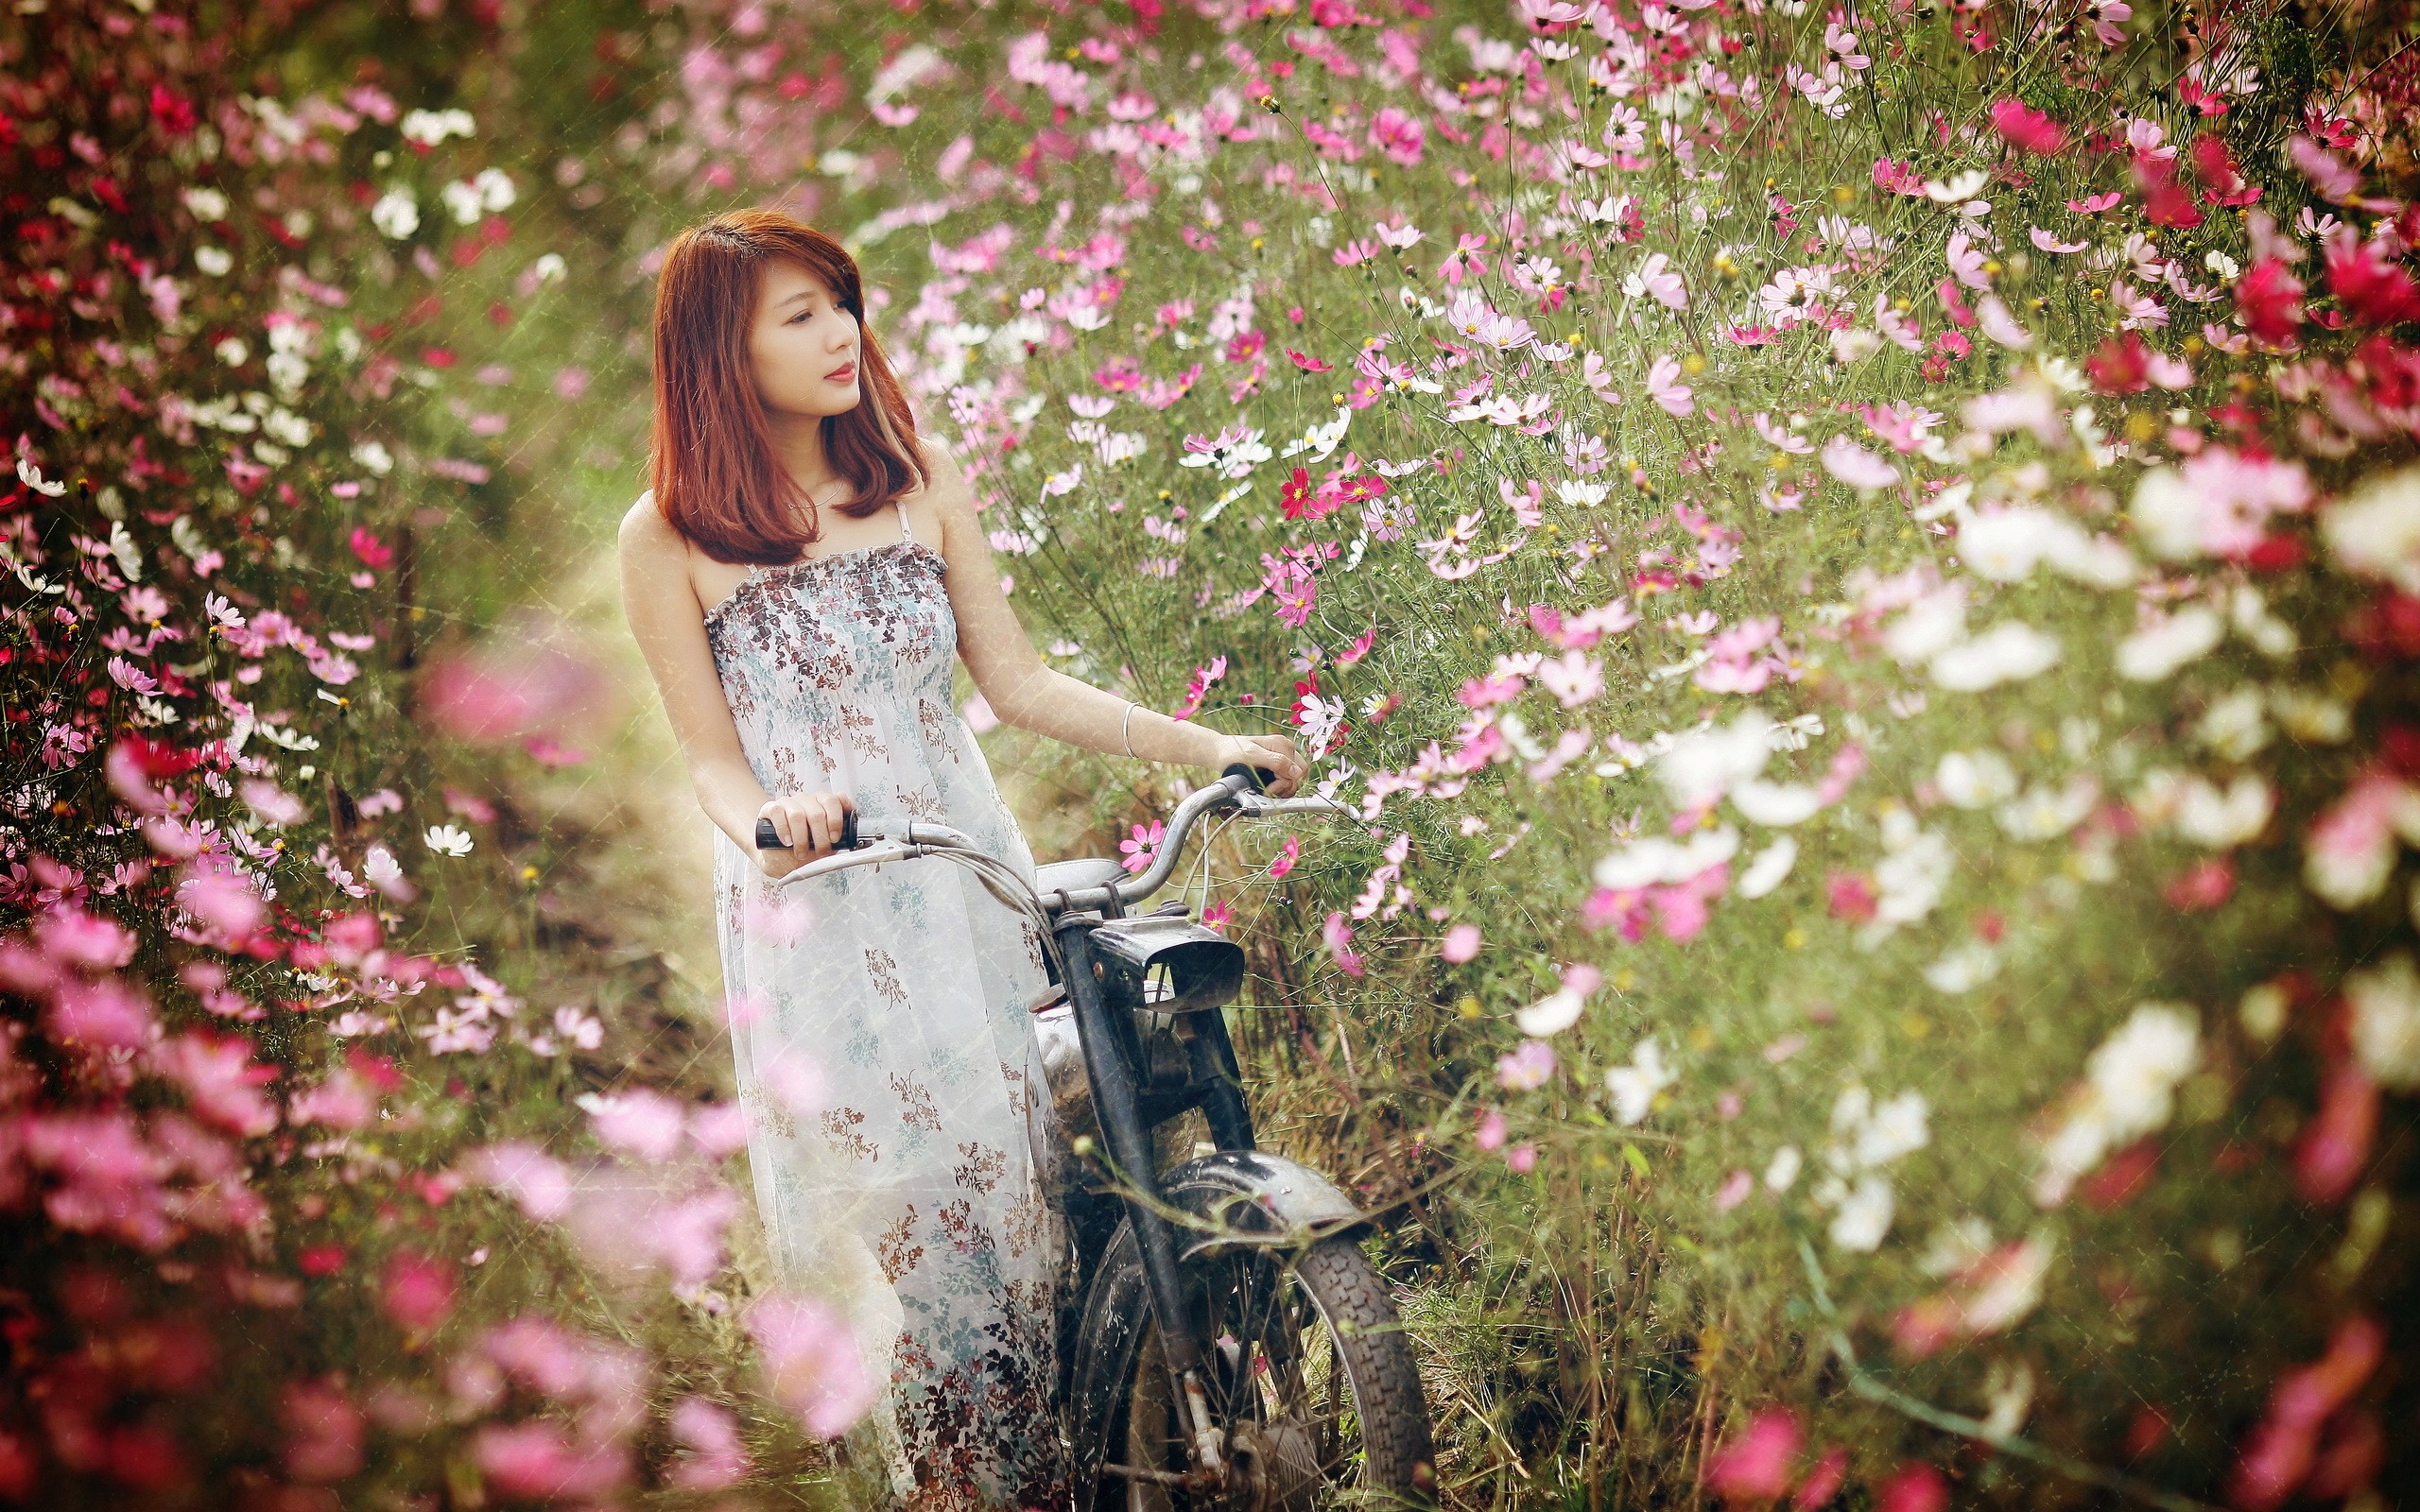 General 2560x1600 Asian flowers nature meinv women model vehicle women outdoors colorful dress summer dress redhead